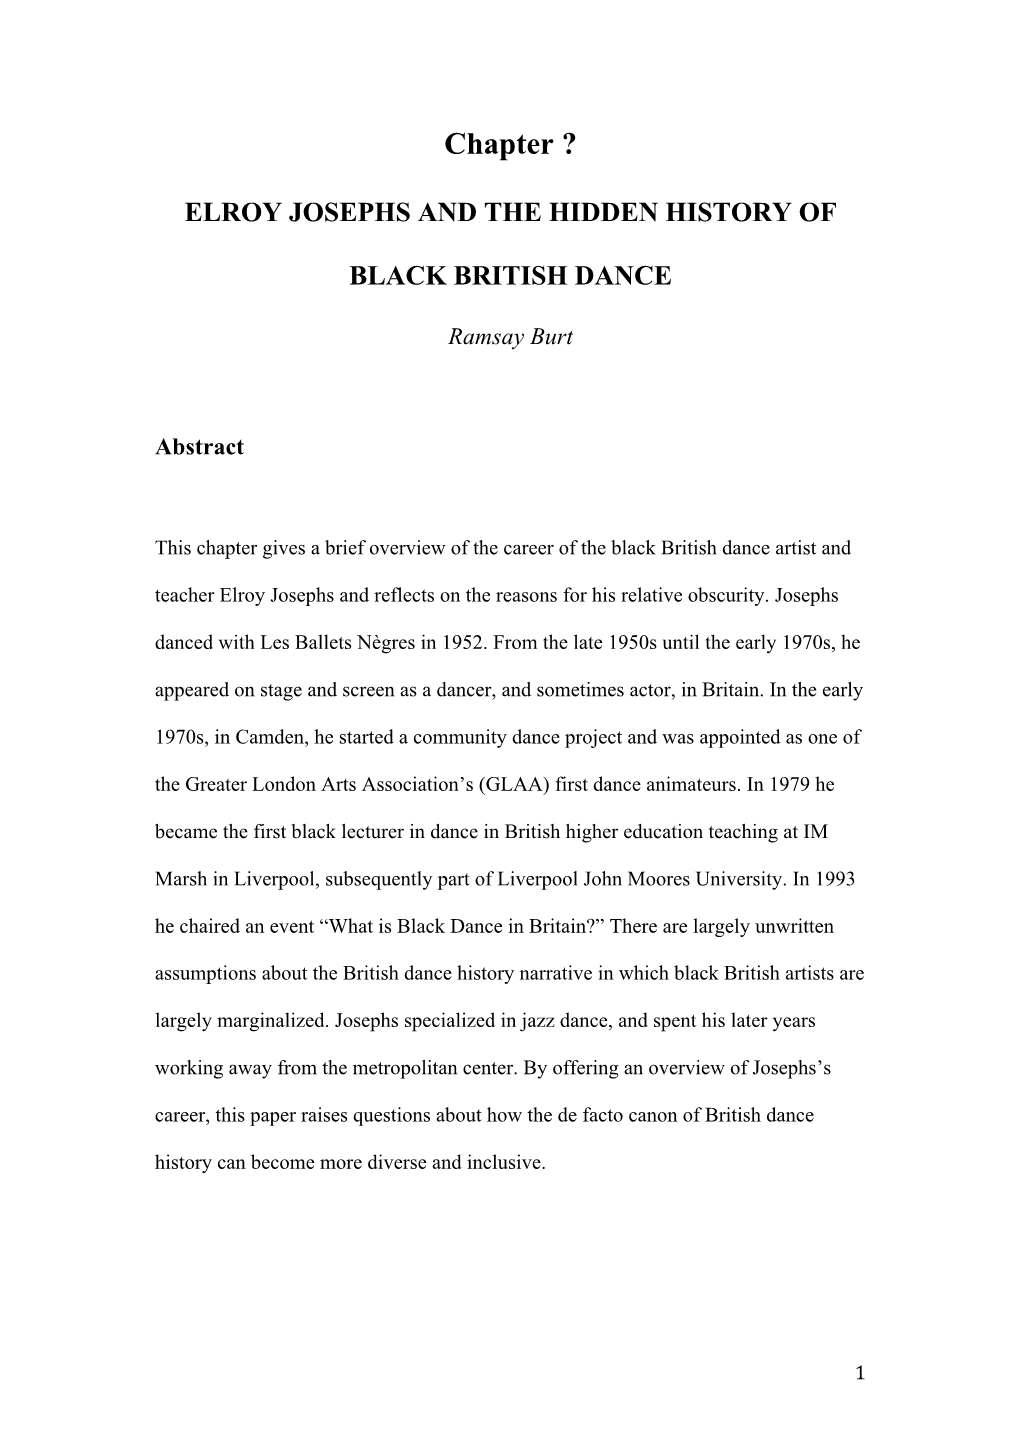 Elroy Josephs and the Hidden History of Black British Dance